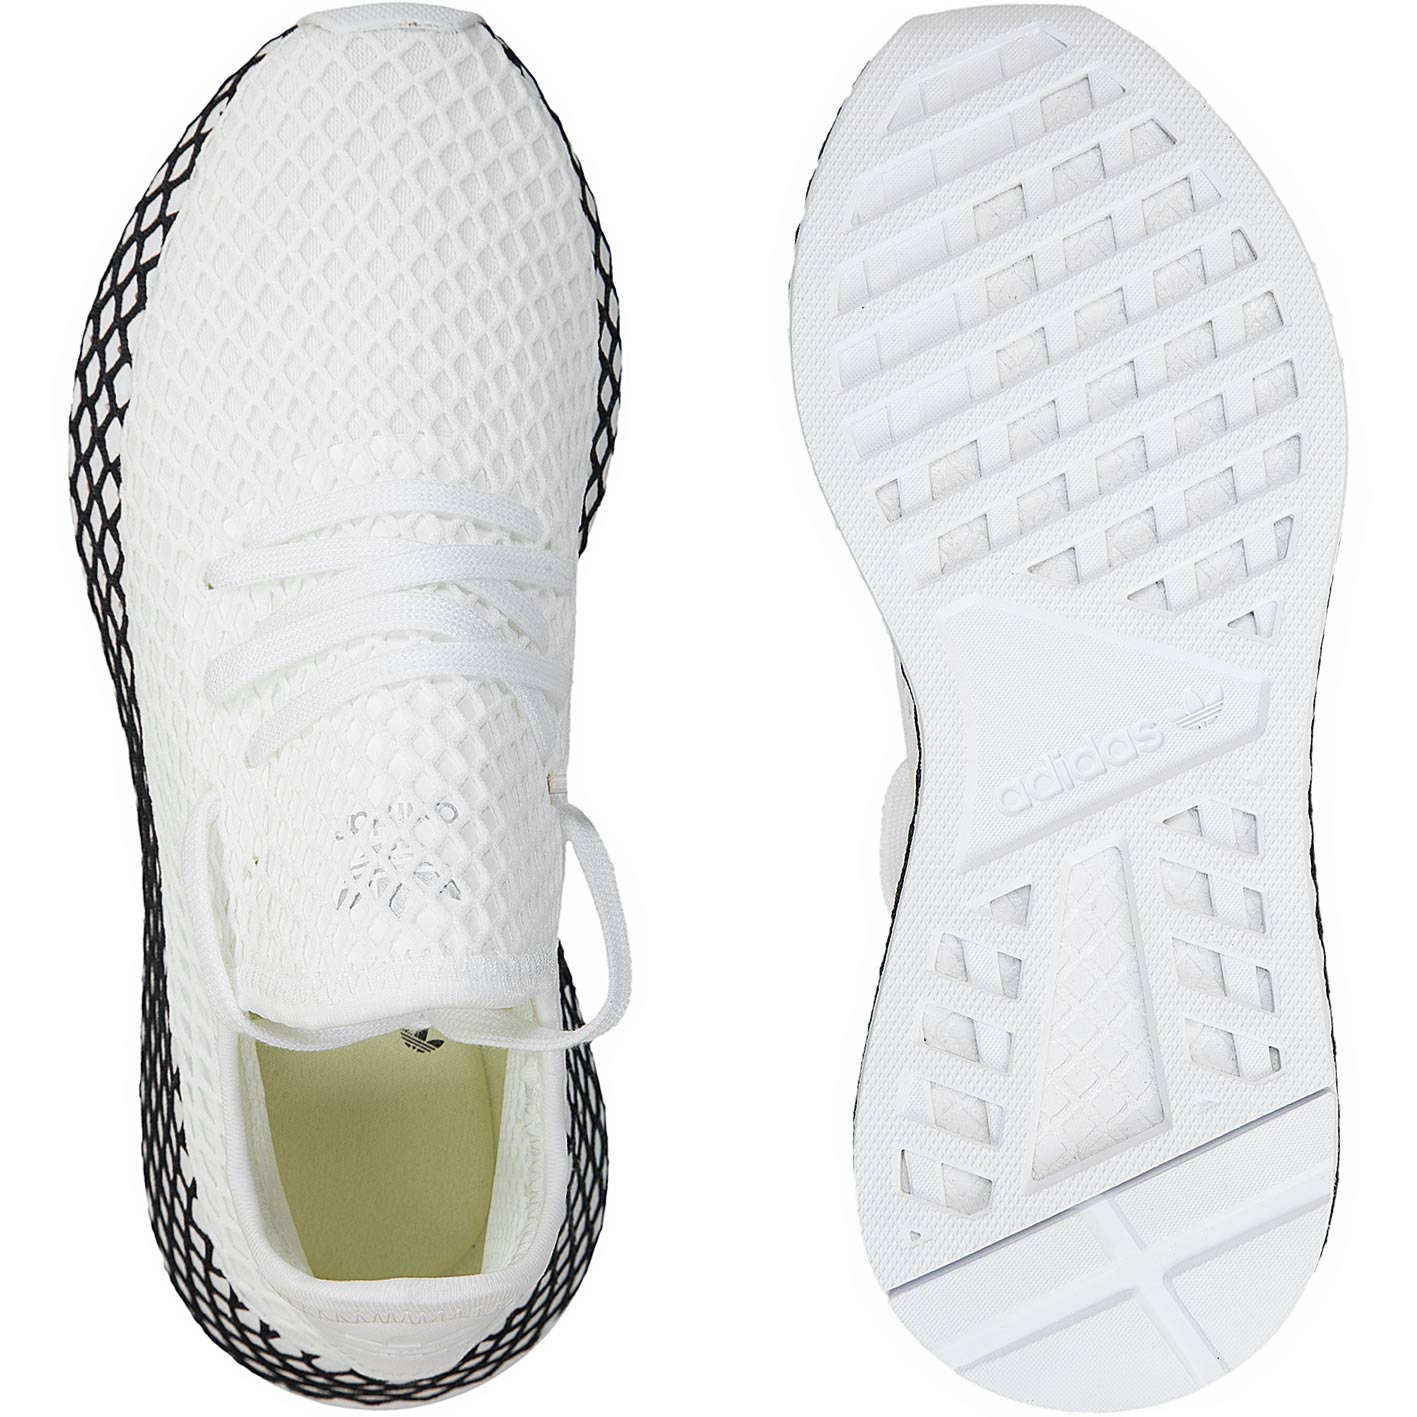 ☆ Adidas Originals Sneaker Deerupt Runner weiß/schwarz - hier bestellen!